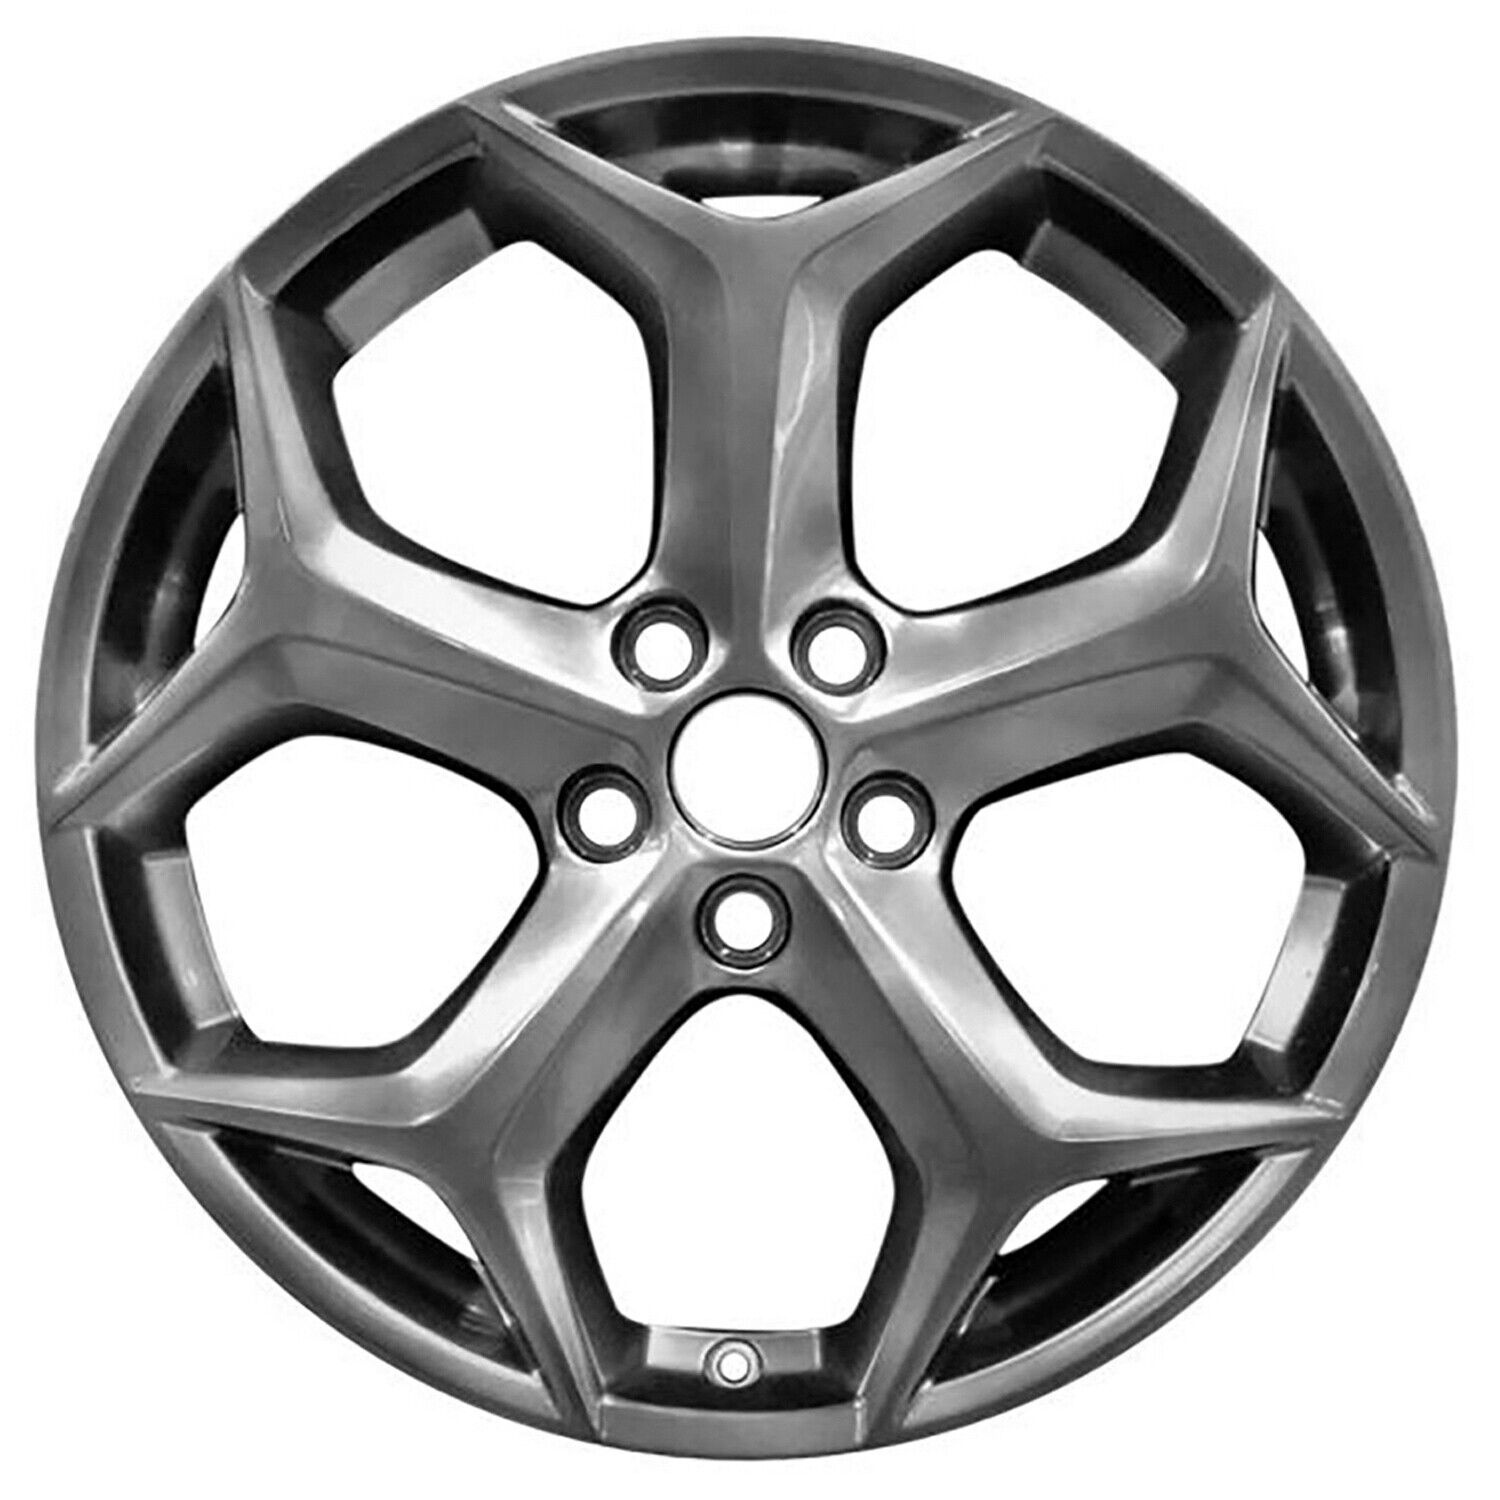 03905 Reconditioned OEM Aluminum Wheel 18x8 fits 2013-2018 Ford Focus